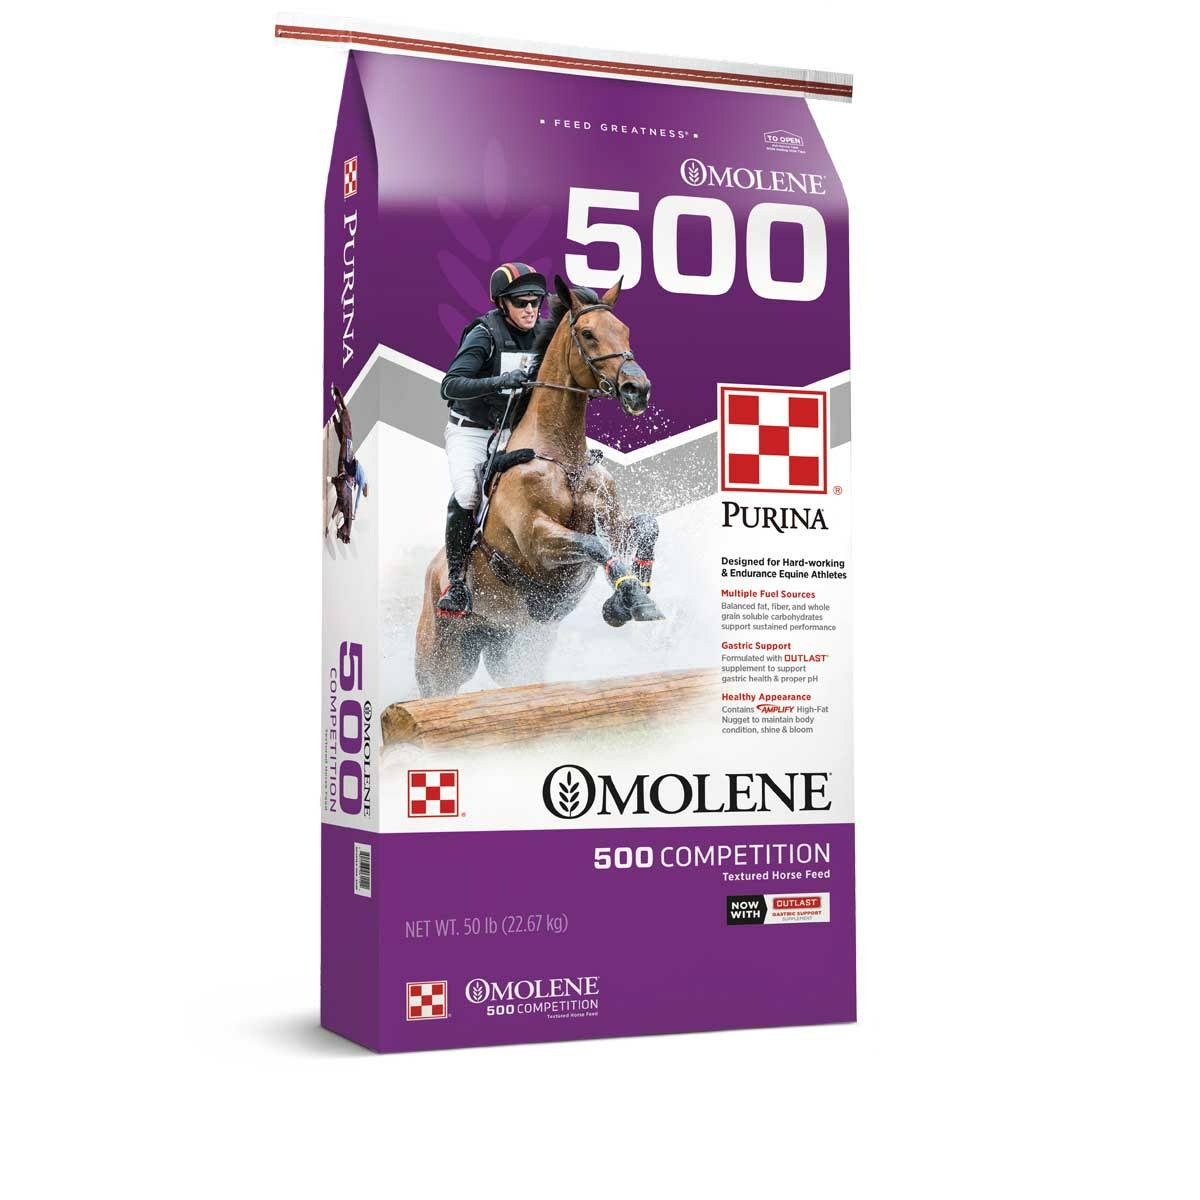 Purina Omolene #500 Competition Horse FEED, 50 lbs.